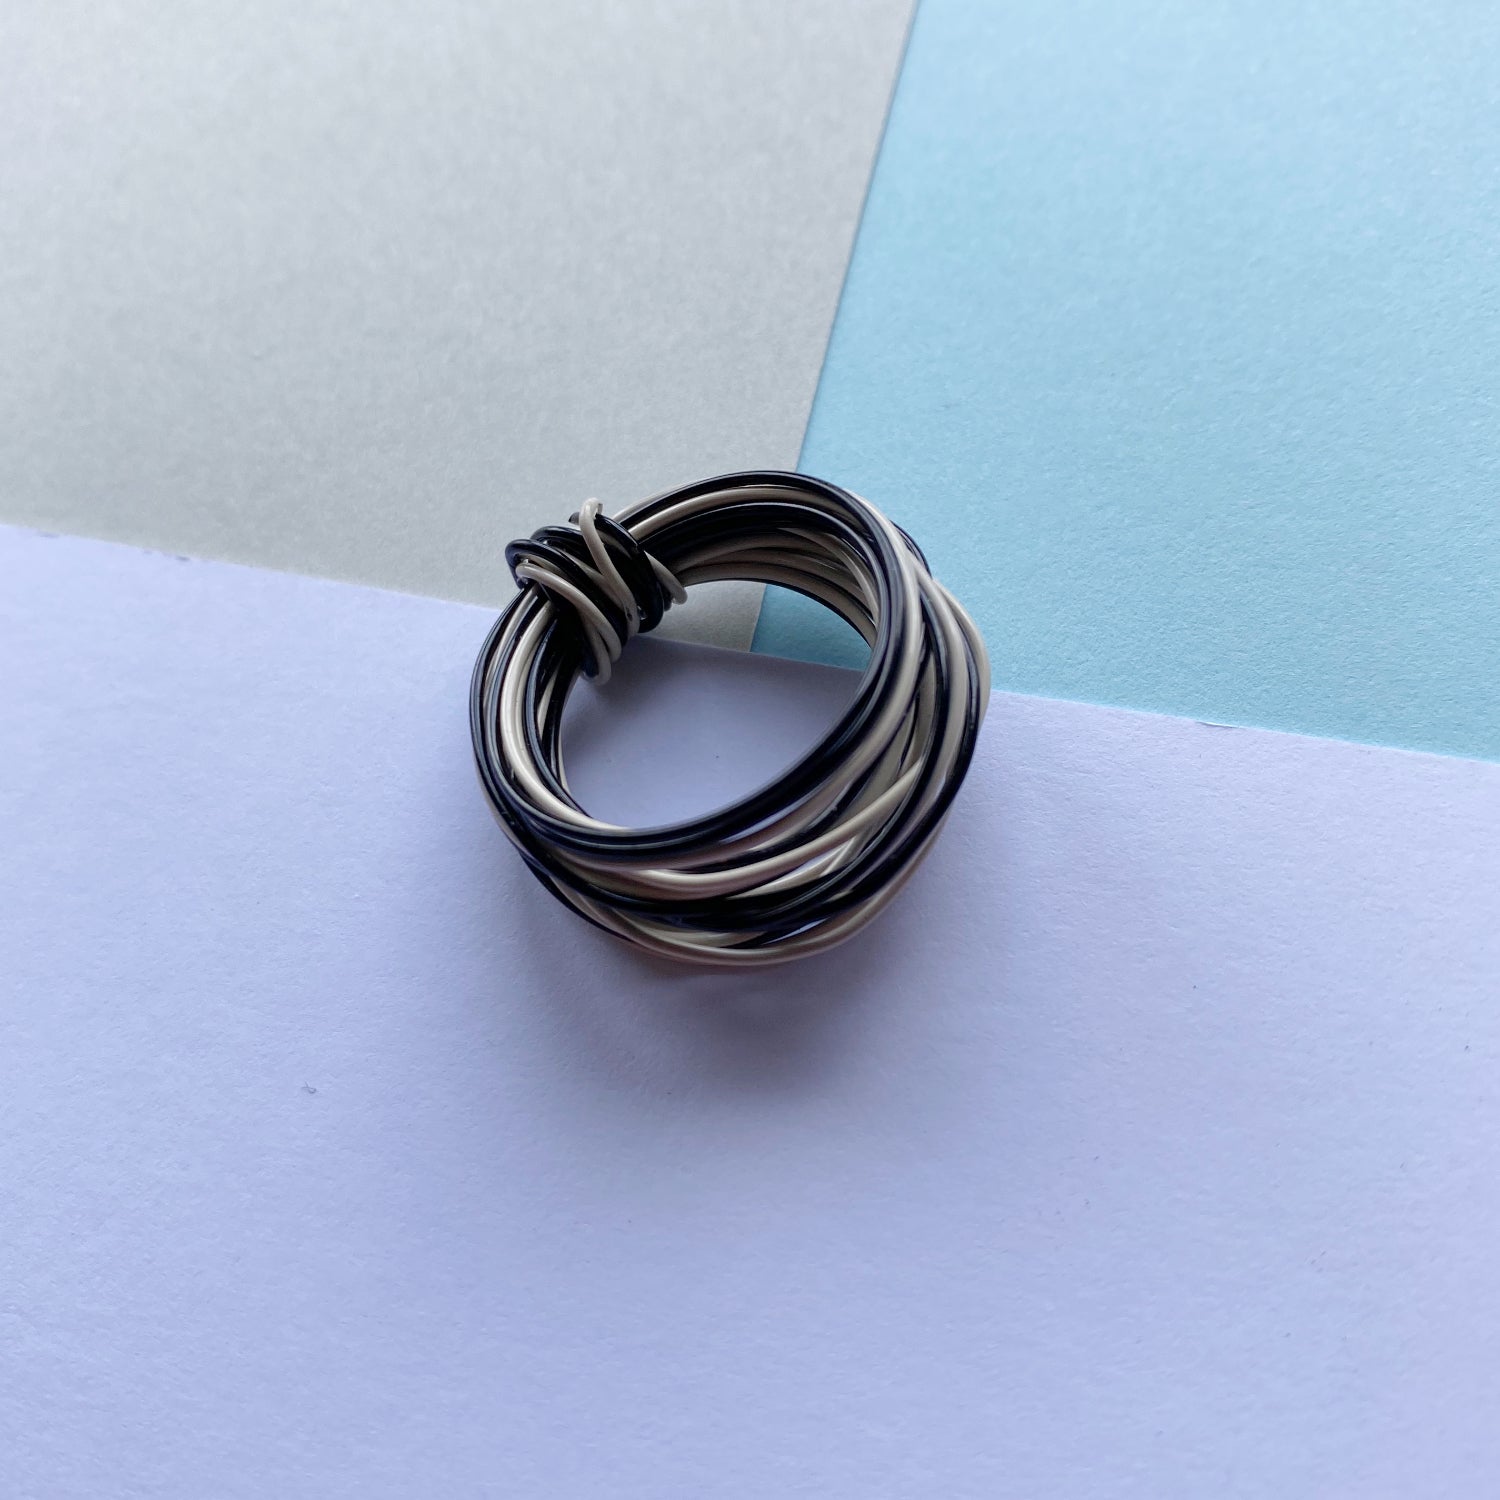 Wire Wrap Rings - silver/neutrals - medium (n-p) - The Argentum Design Co